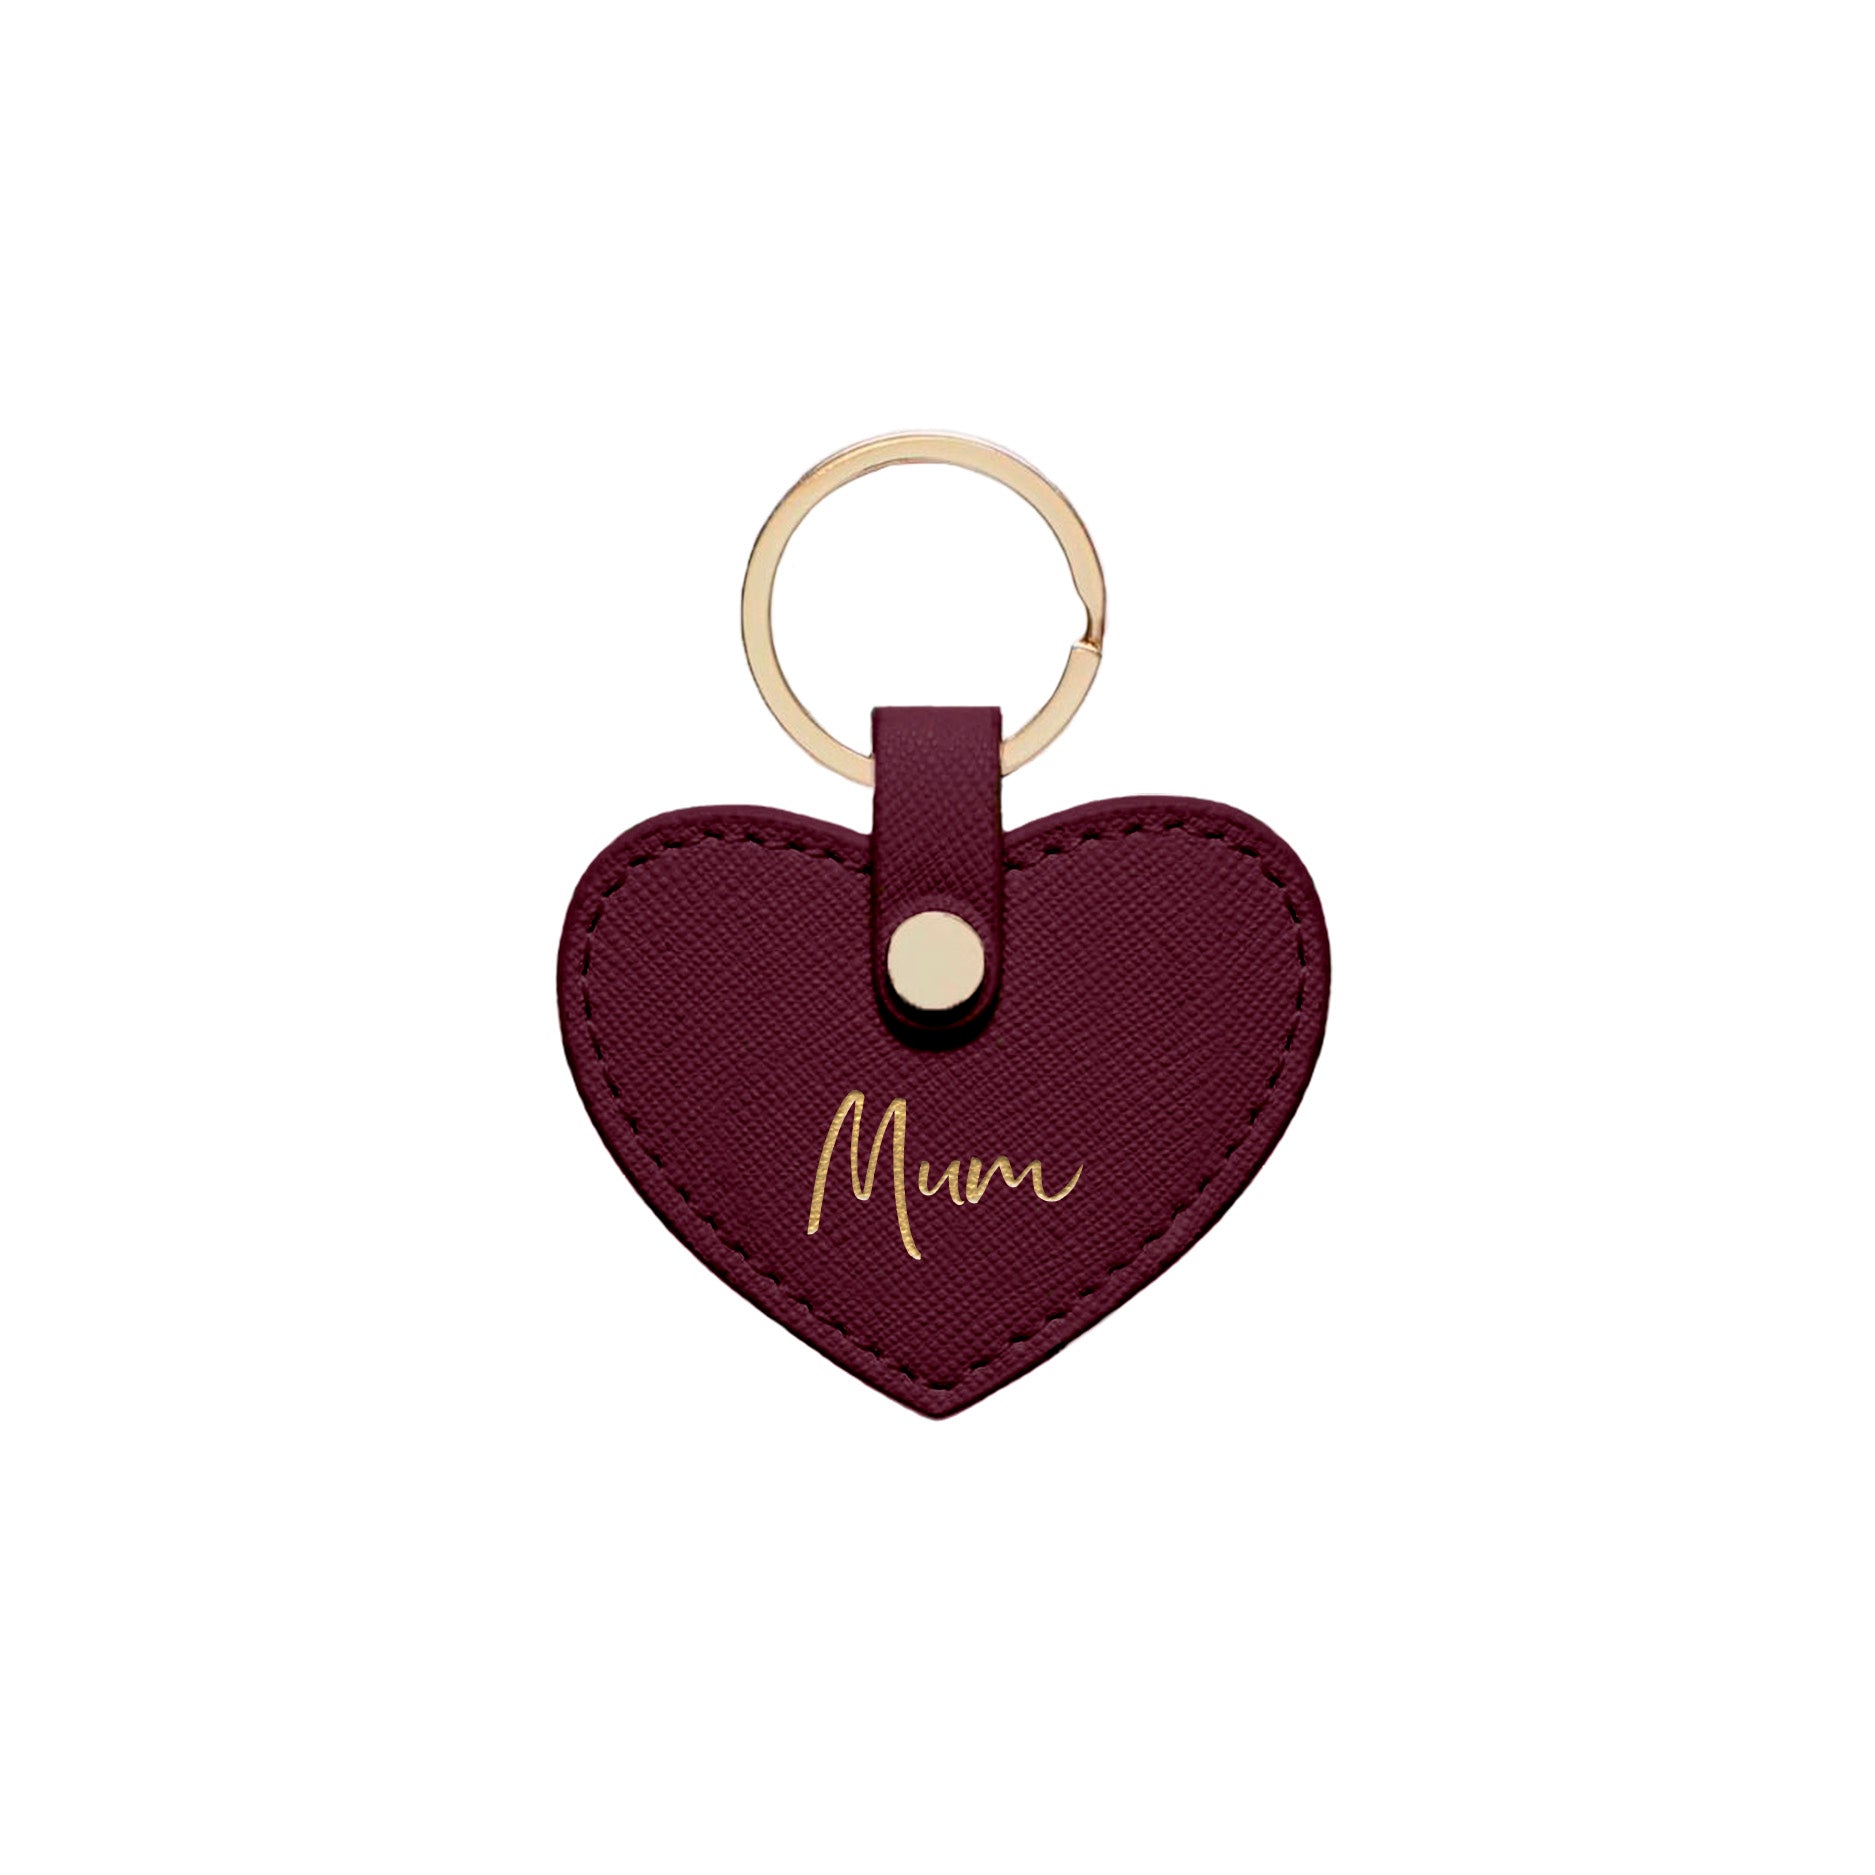 Burgundy Saffiano Leather 'Mum' Key Ring - HB LONDON